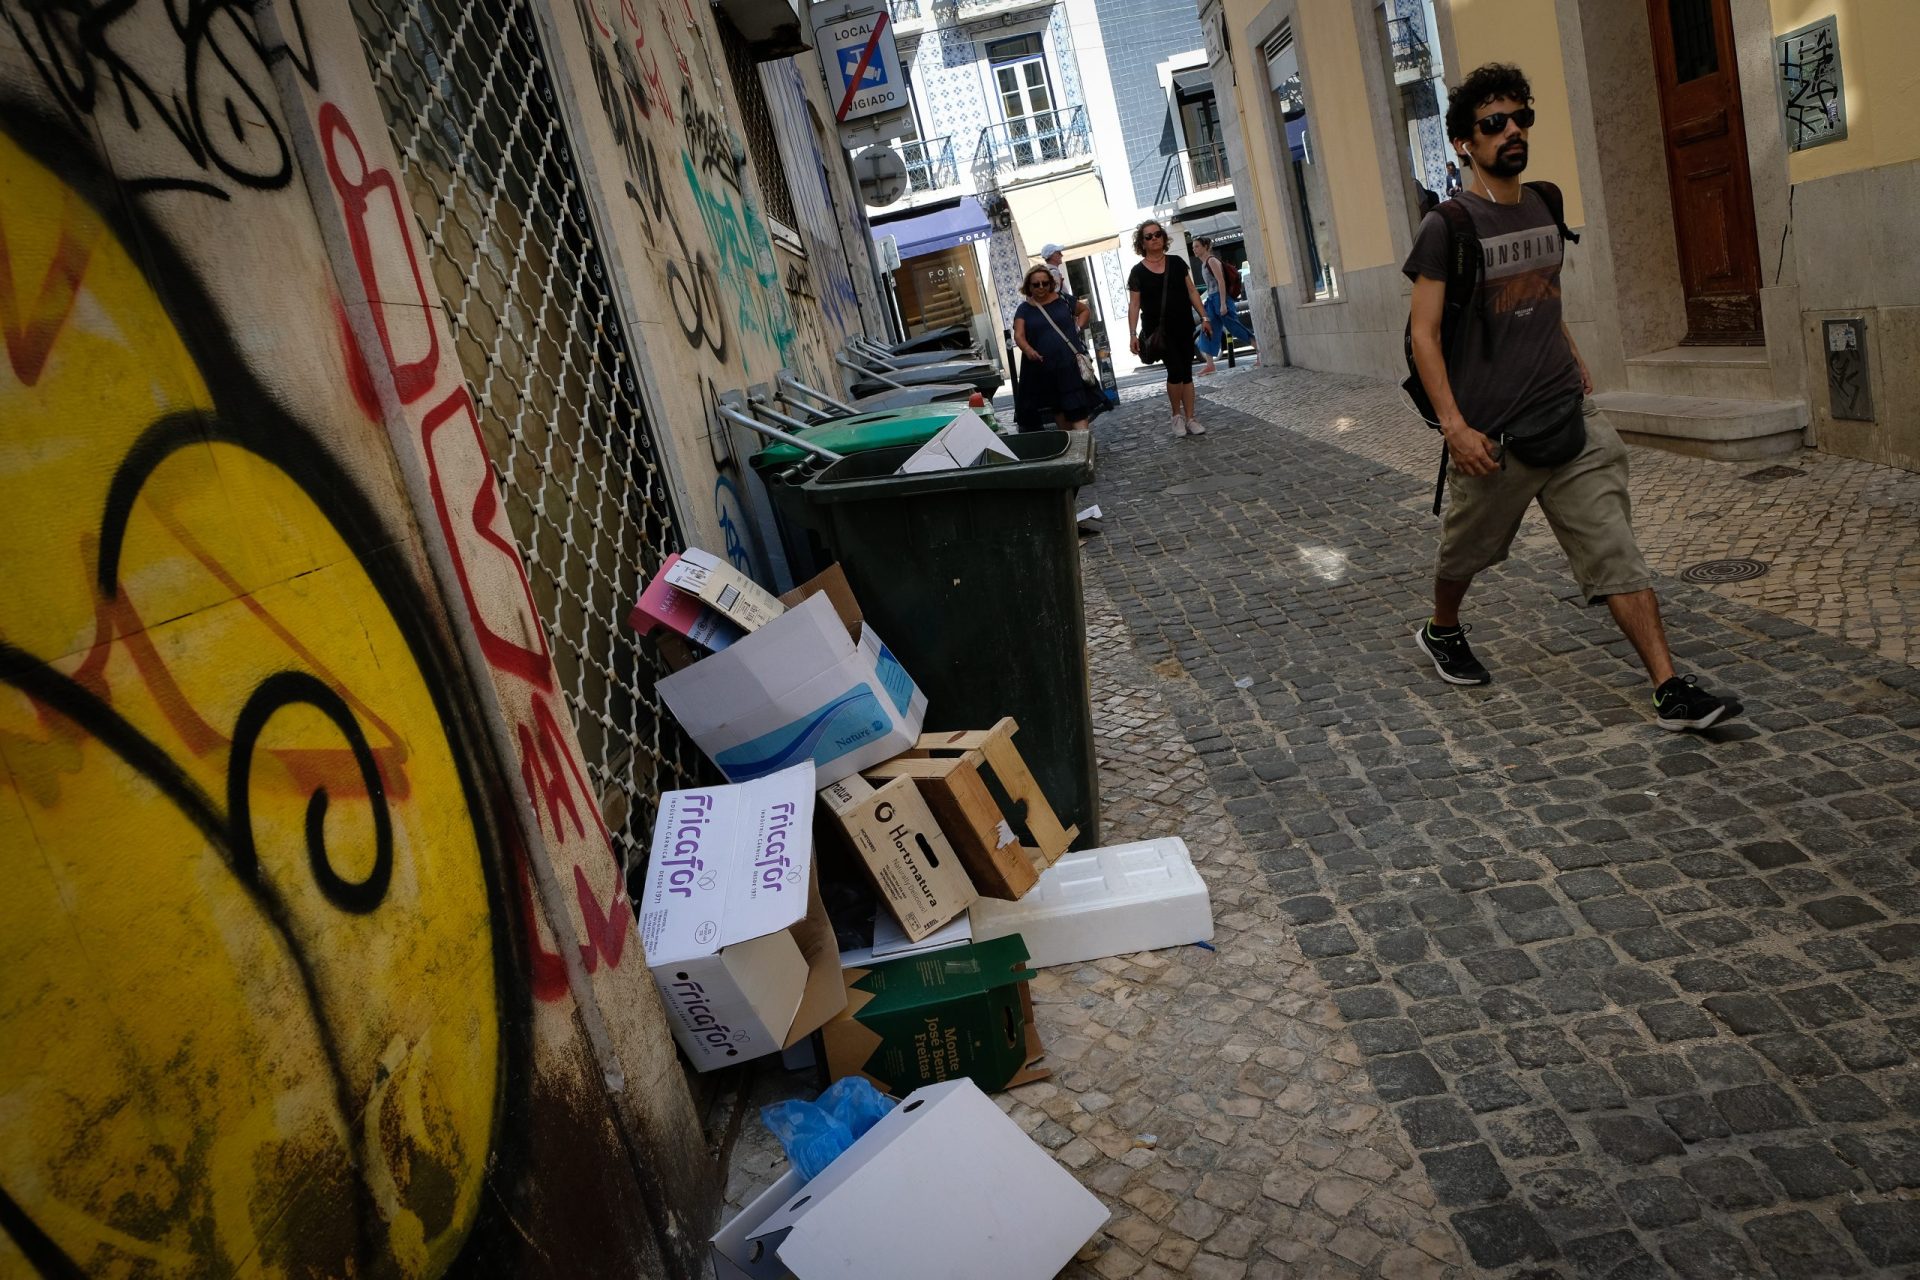 PSD anuncia que vai propor recolha de lixo 365 dias por ano em todas as freguesias de Lisboa